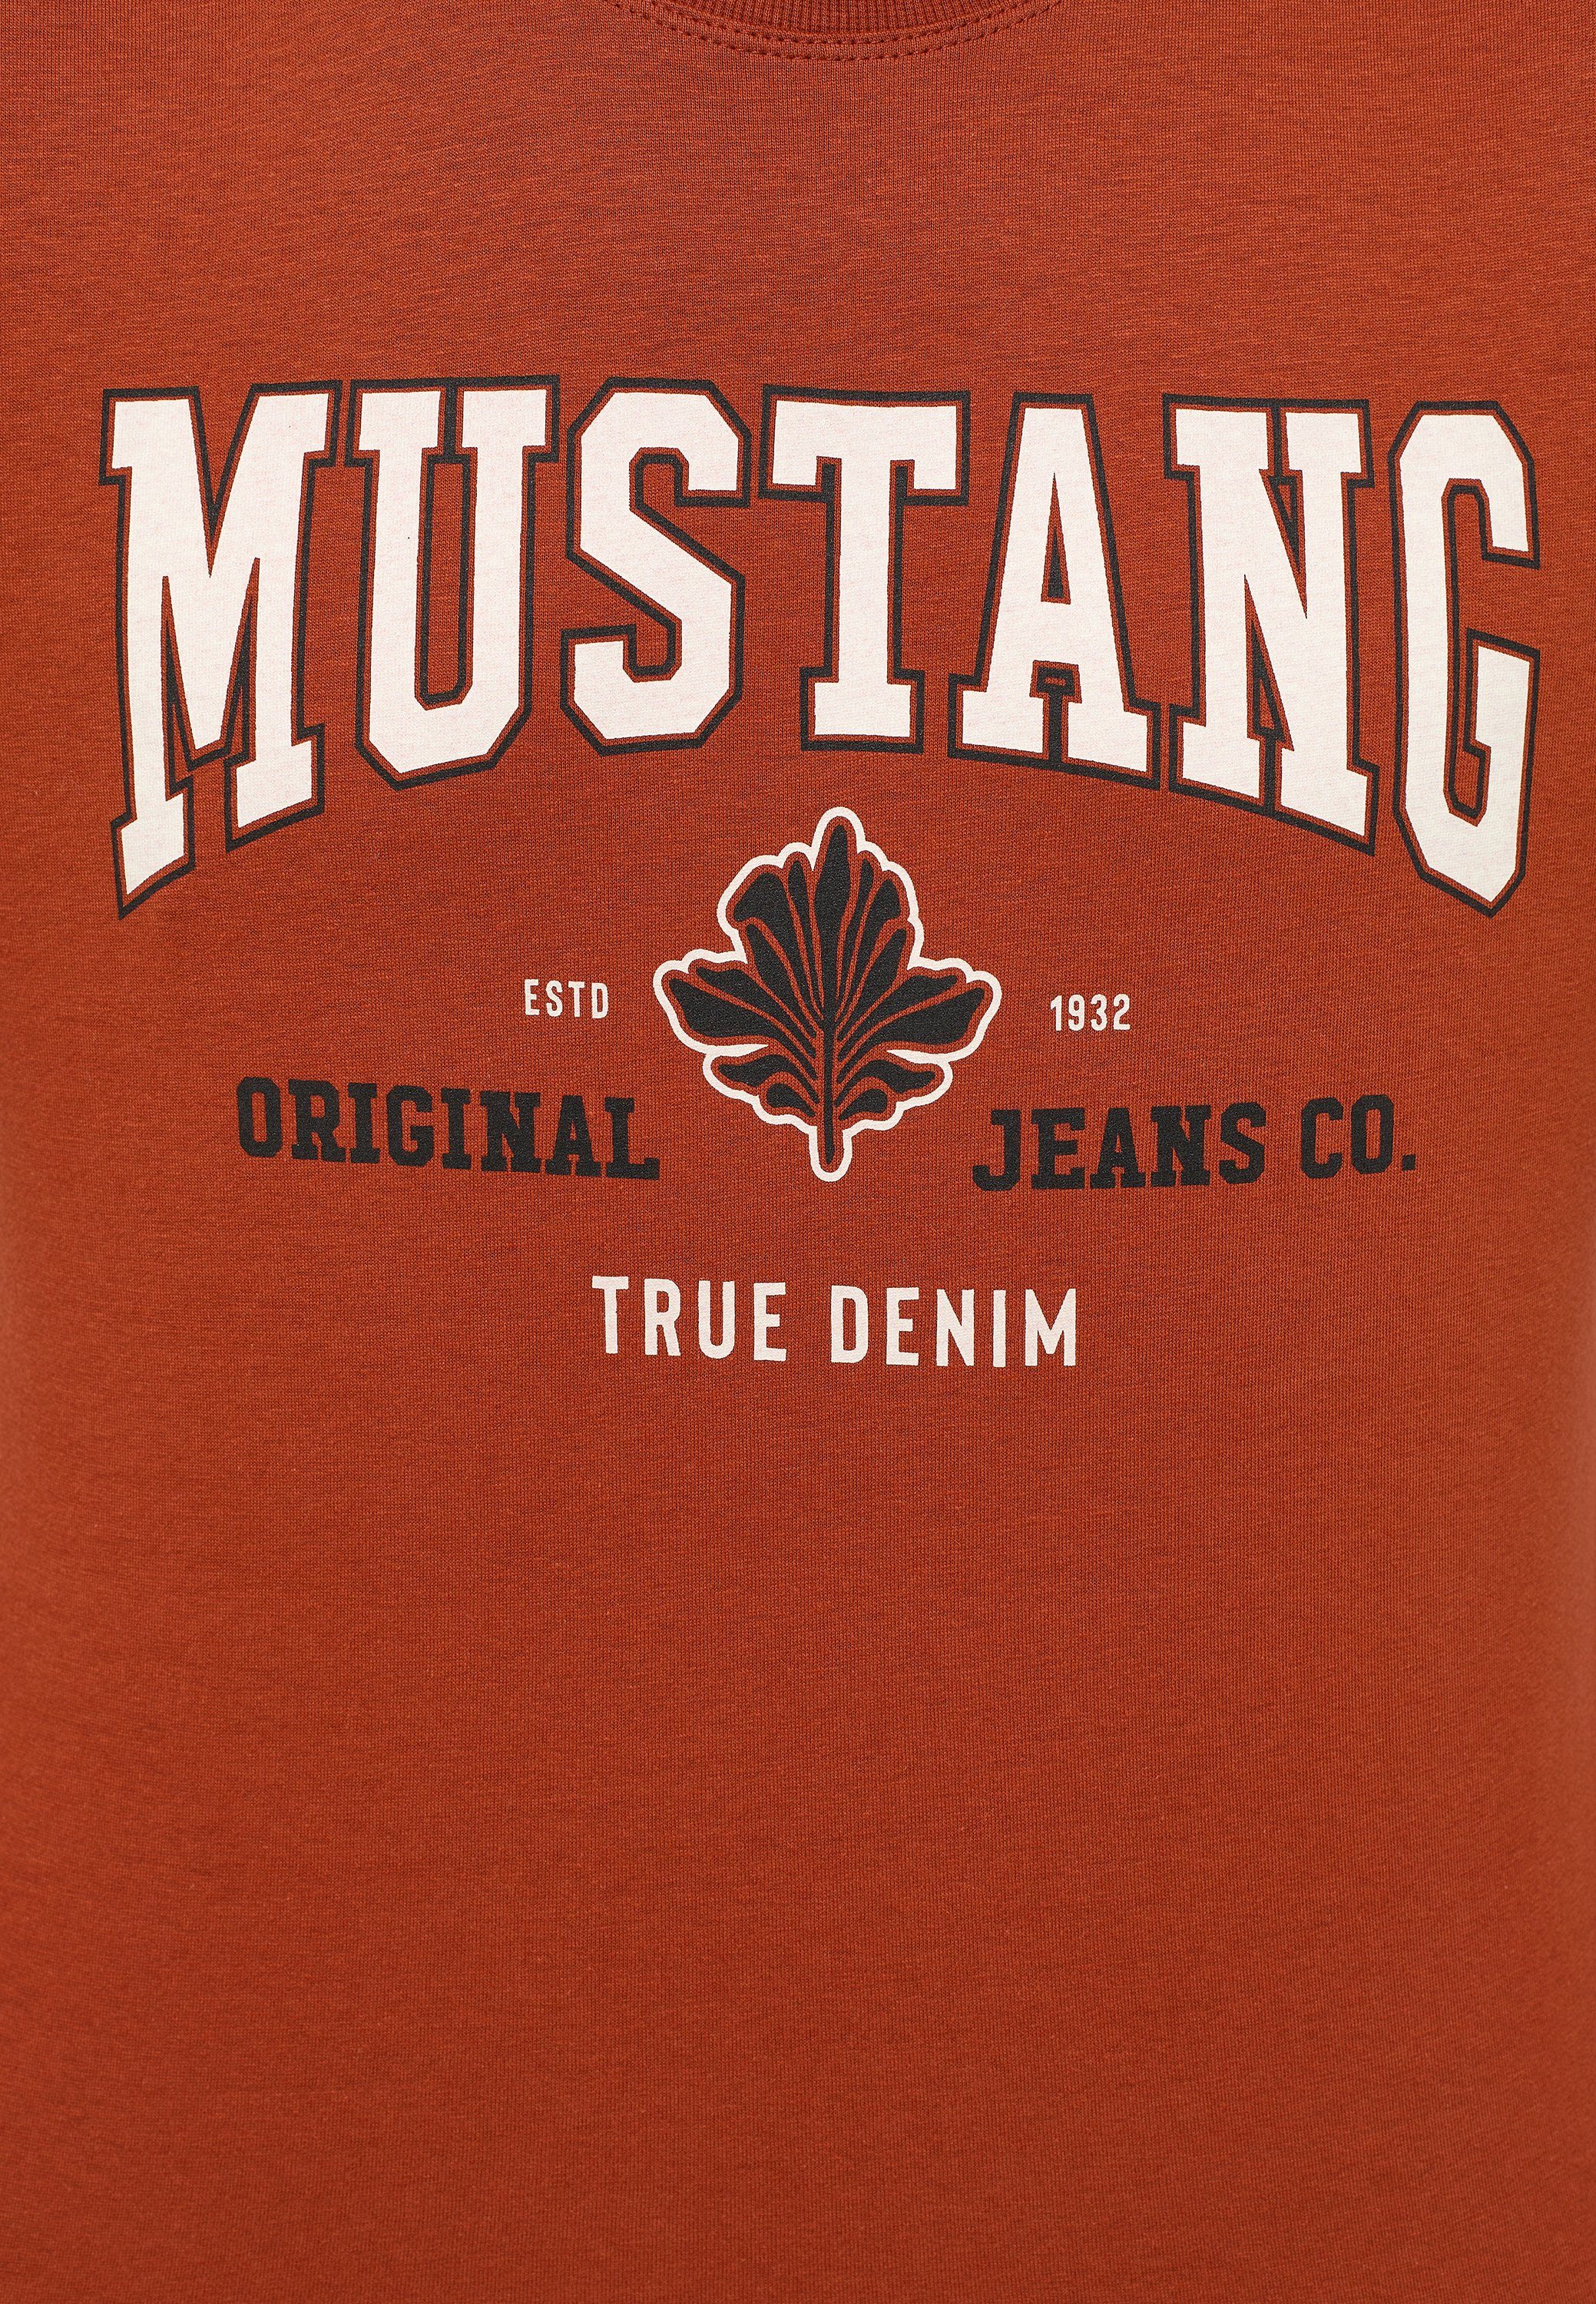 Print-Shirt Kurzarmshirt braun Mustang MUSTANG